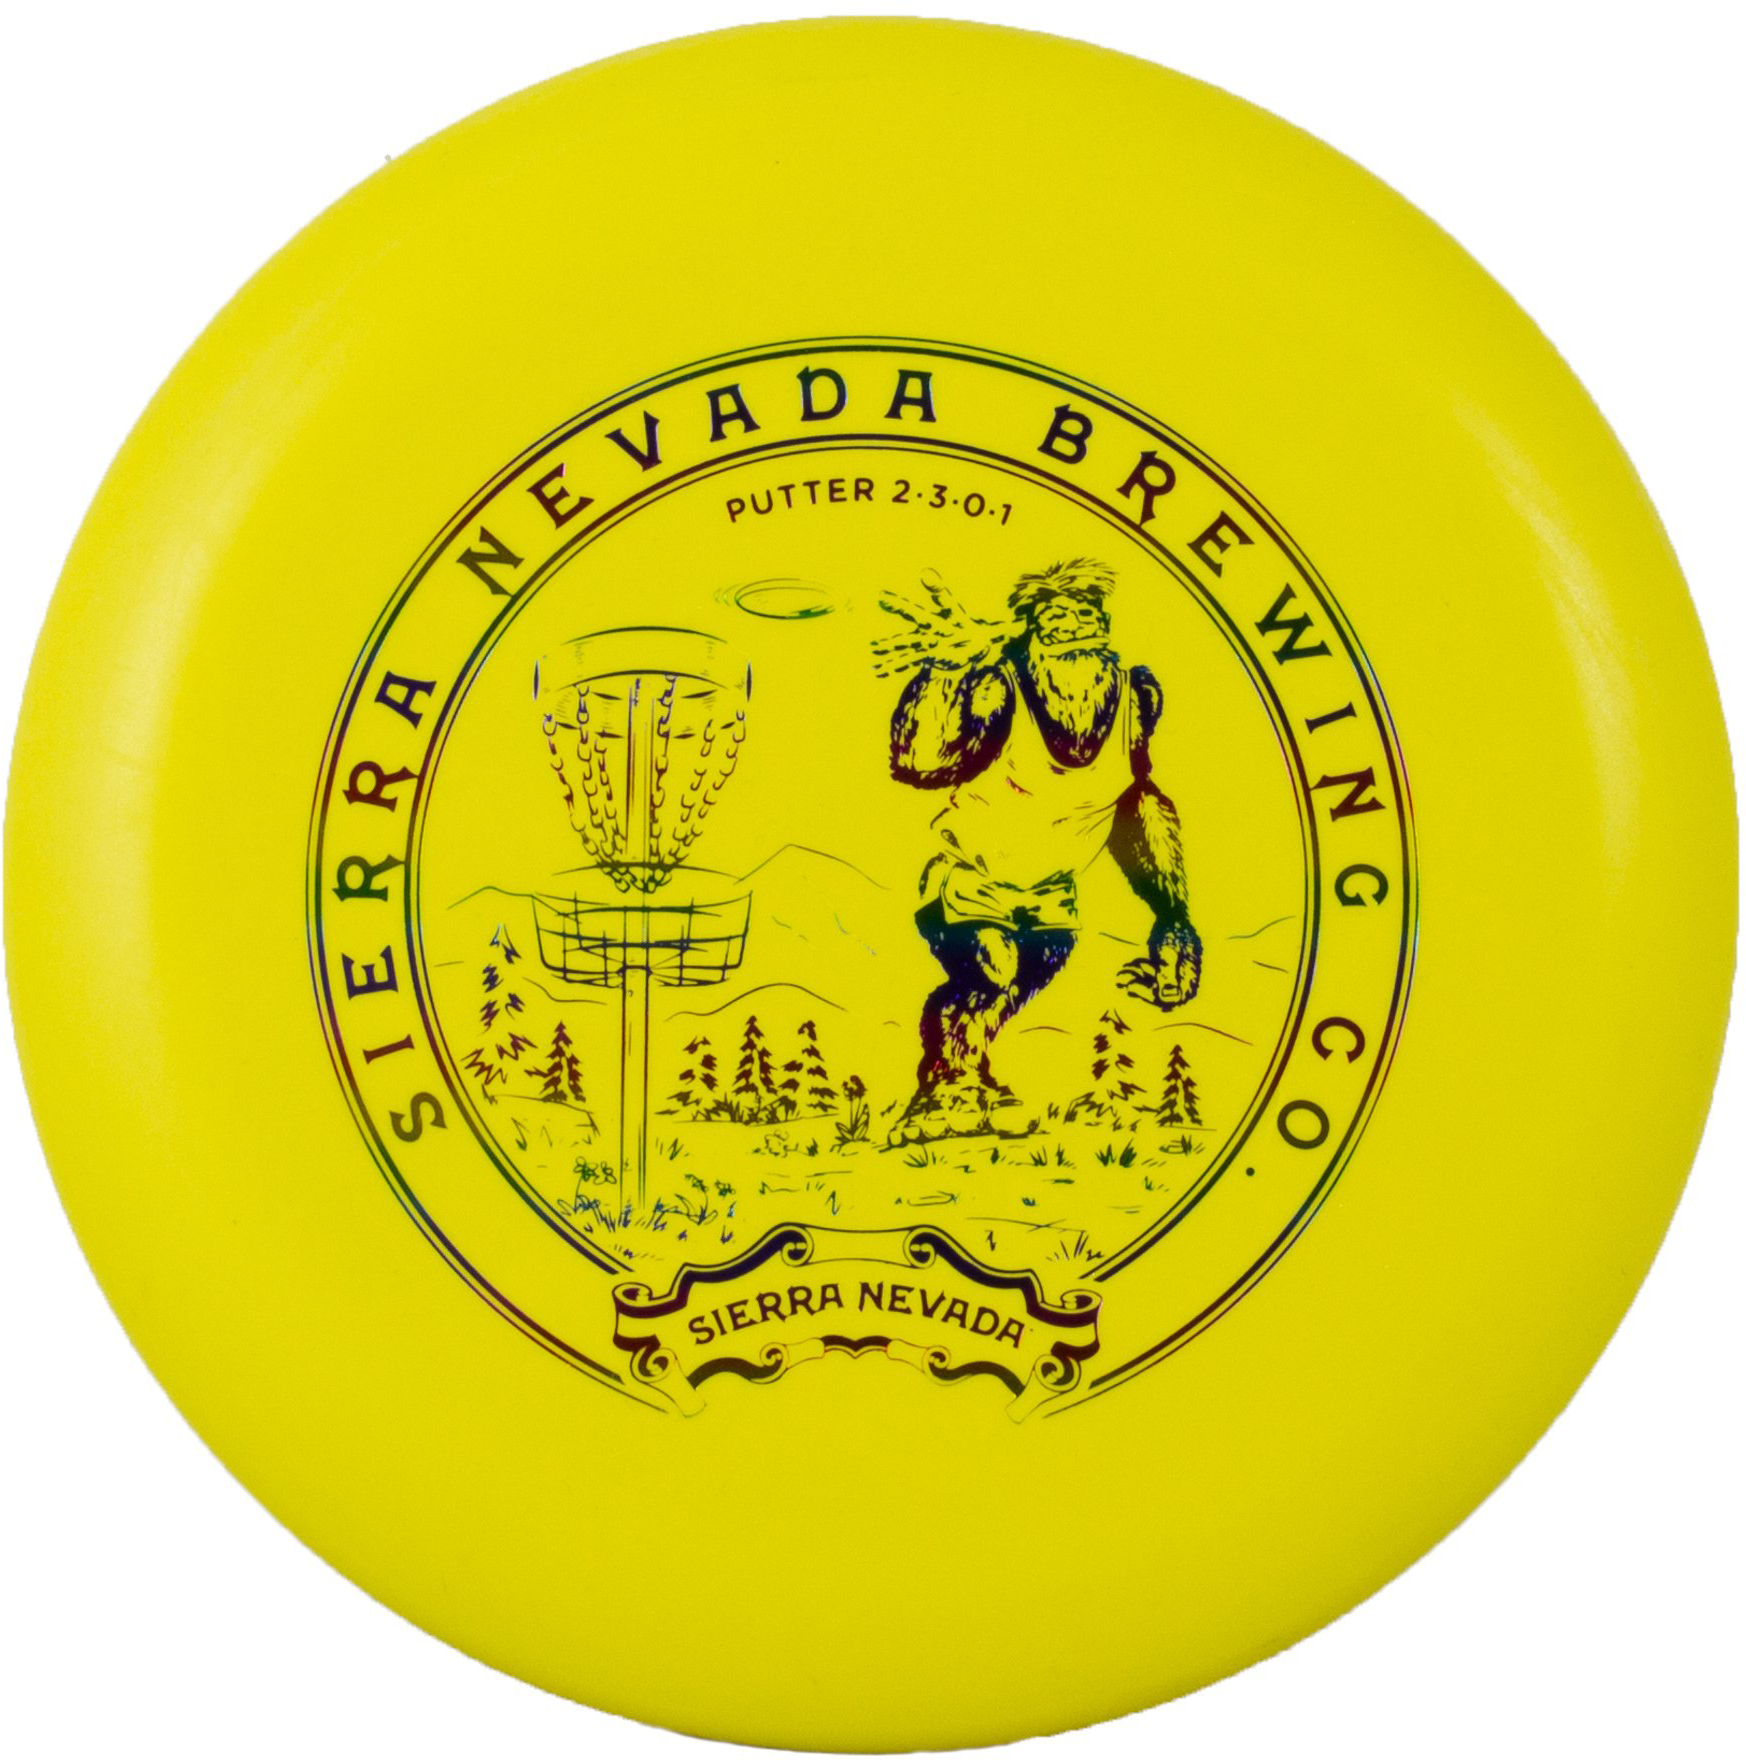 Sierra Nevada disc golf disc - yellow